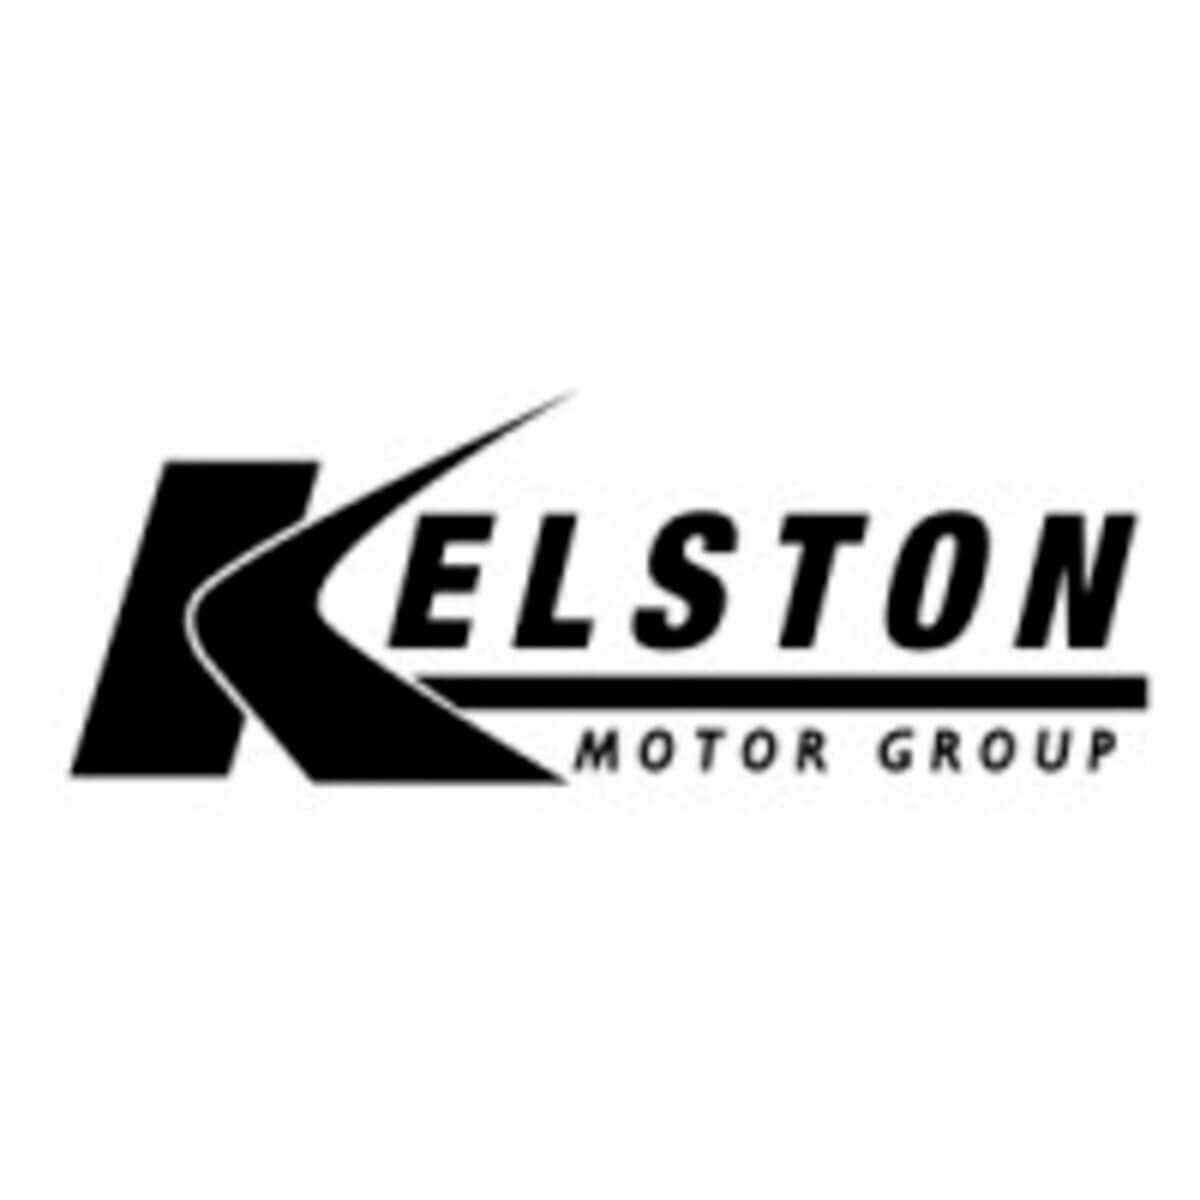 Kelston-20221202-122443.jpg